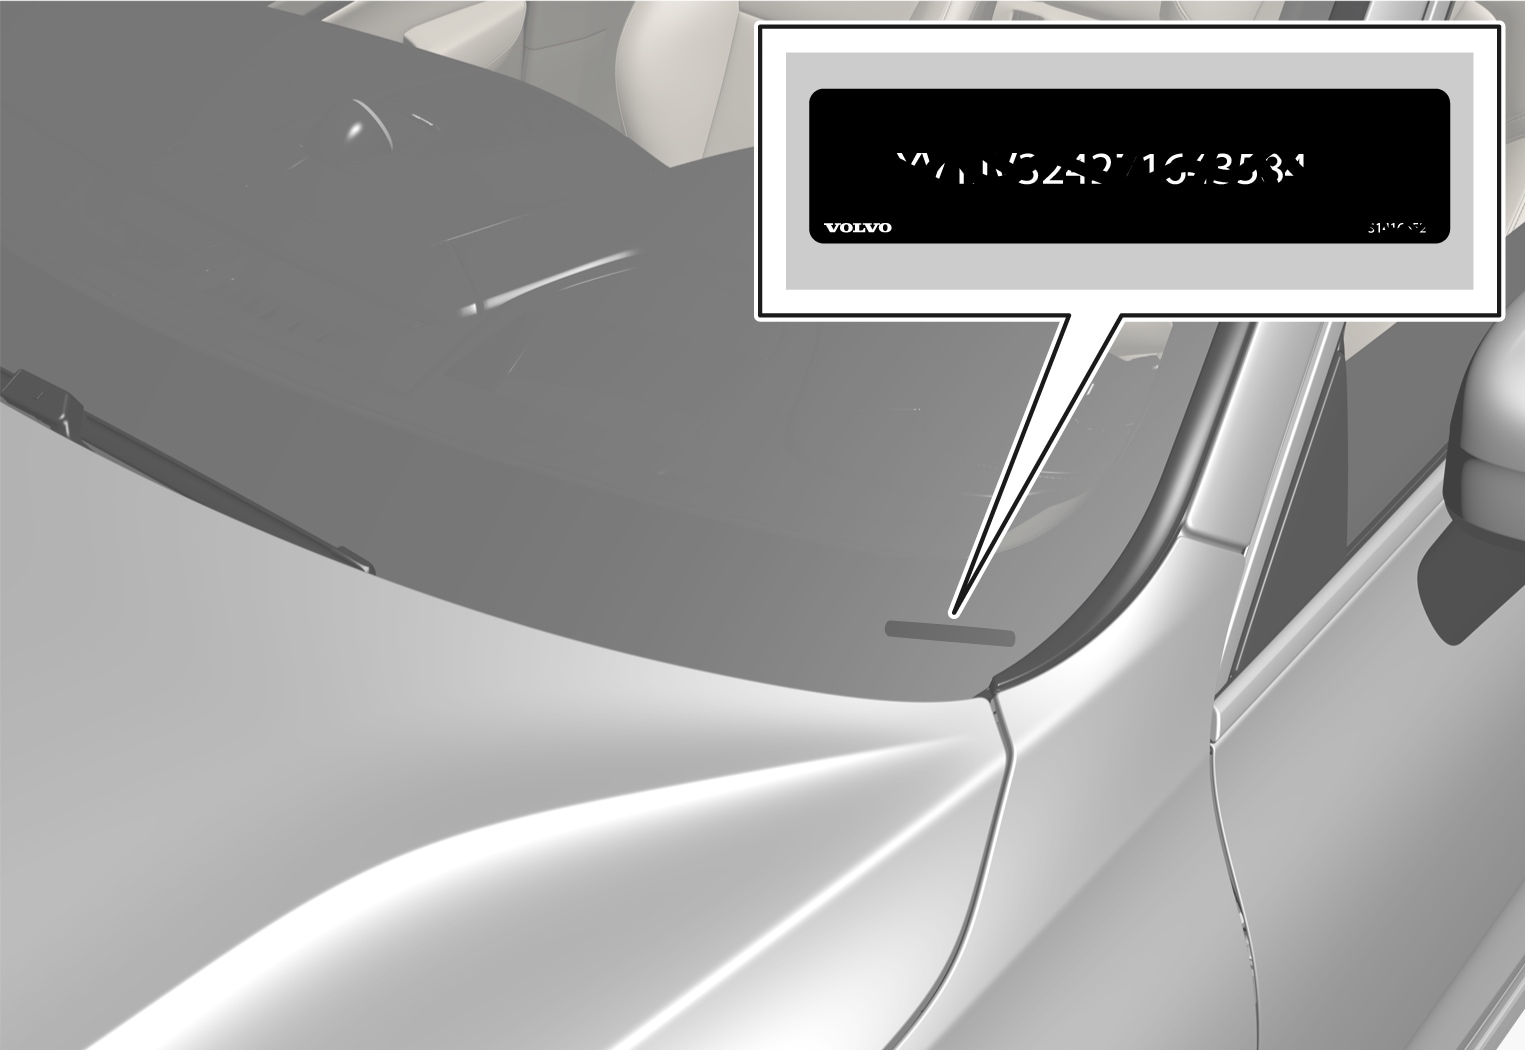 Px-2146-VIN number through windshield